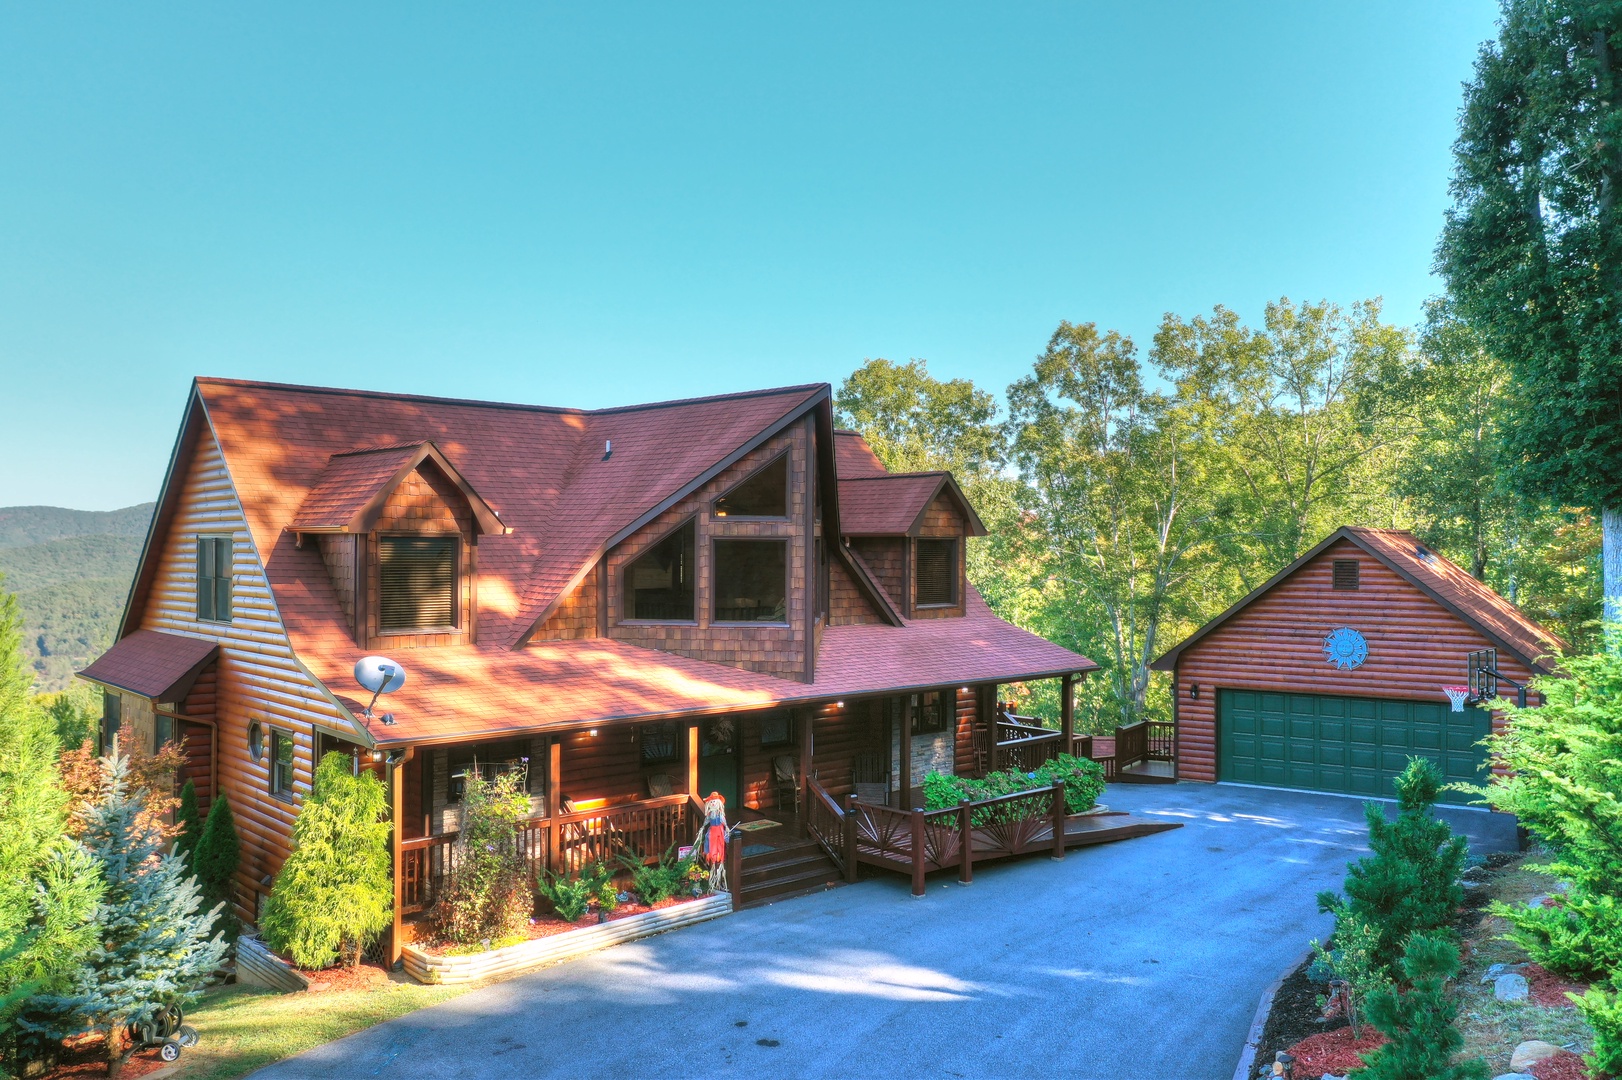 Fraggle Rock - Cabin Rental in Mineral Bluff, GA